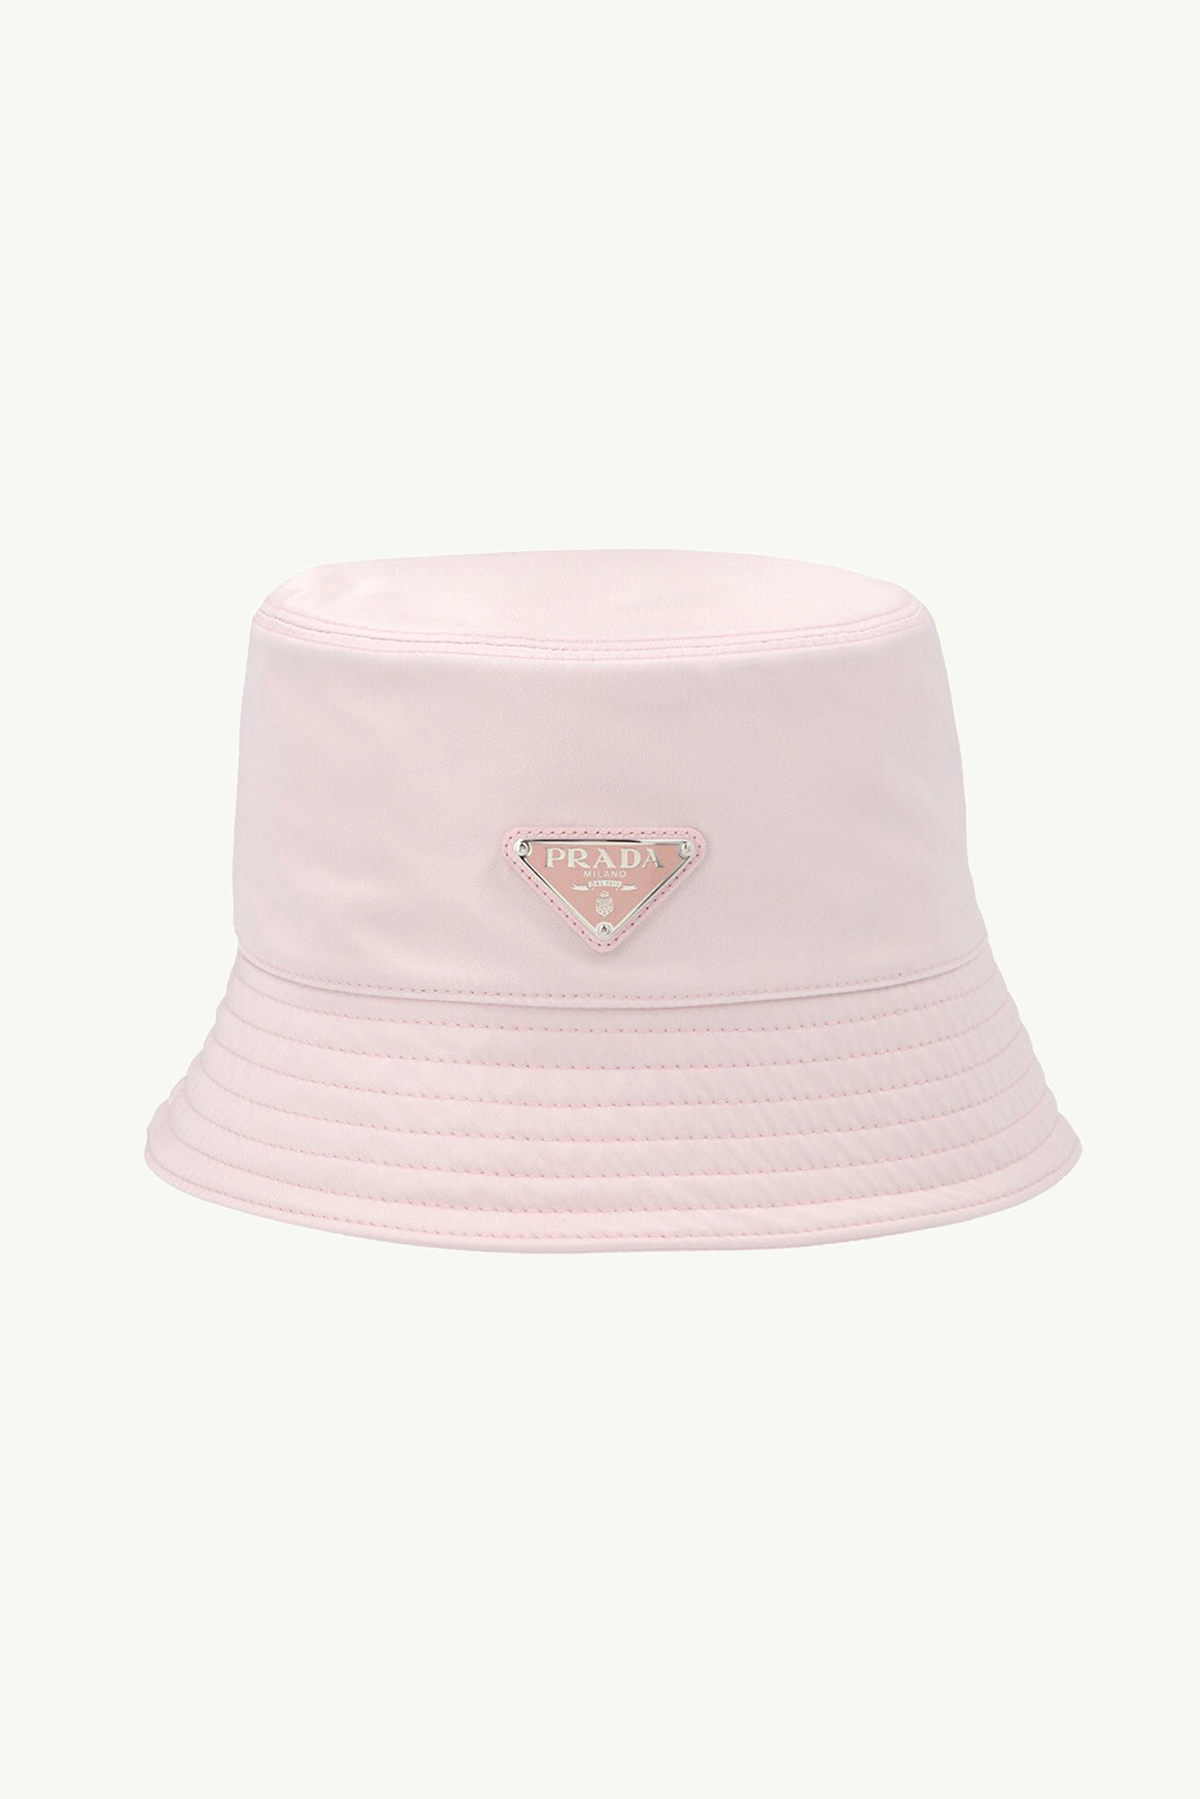 Prada Triangle Logo Bucket Hat in Alabaster Pink Re-Nylon 0